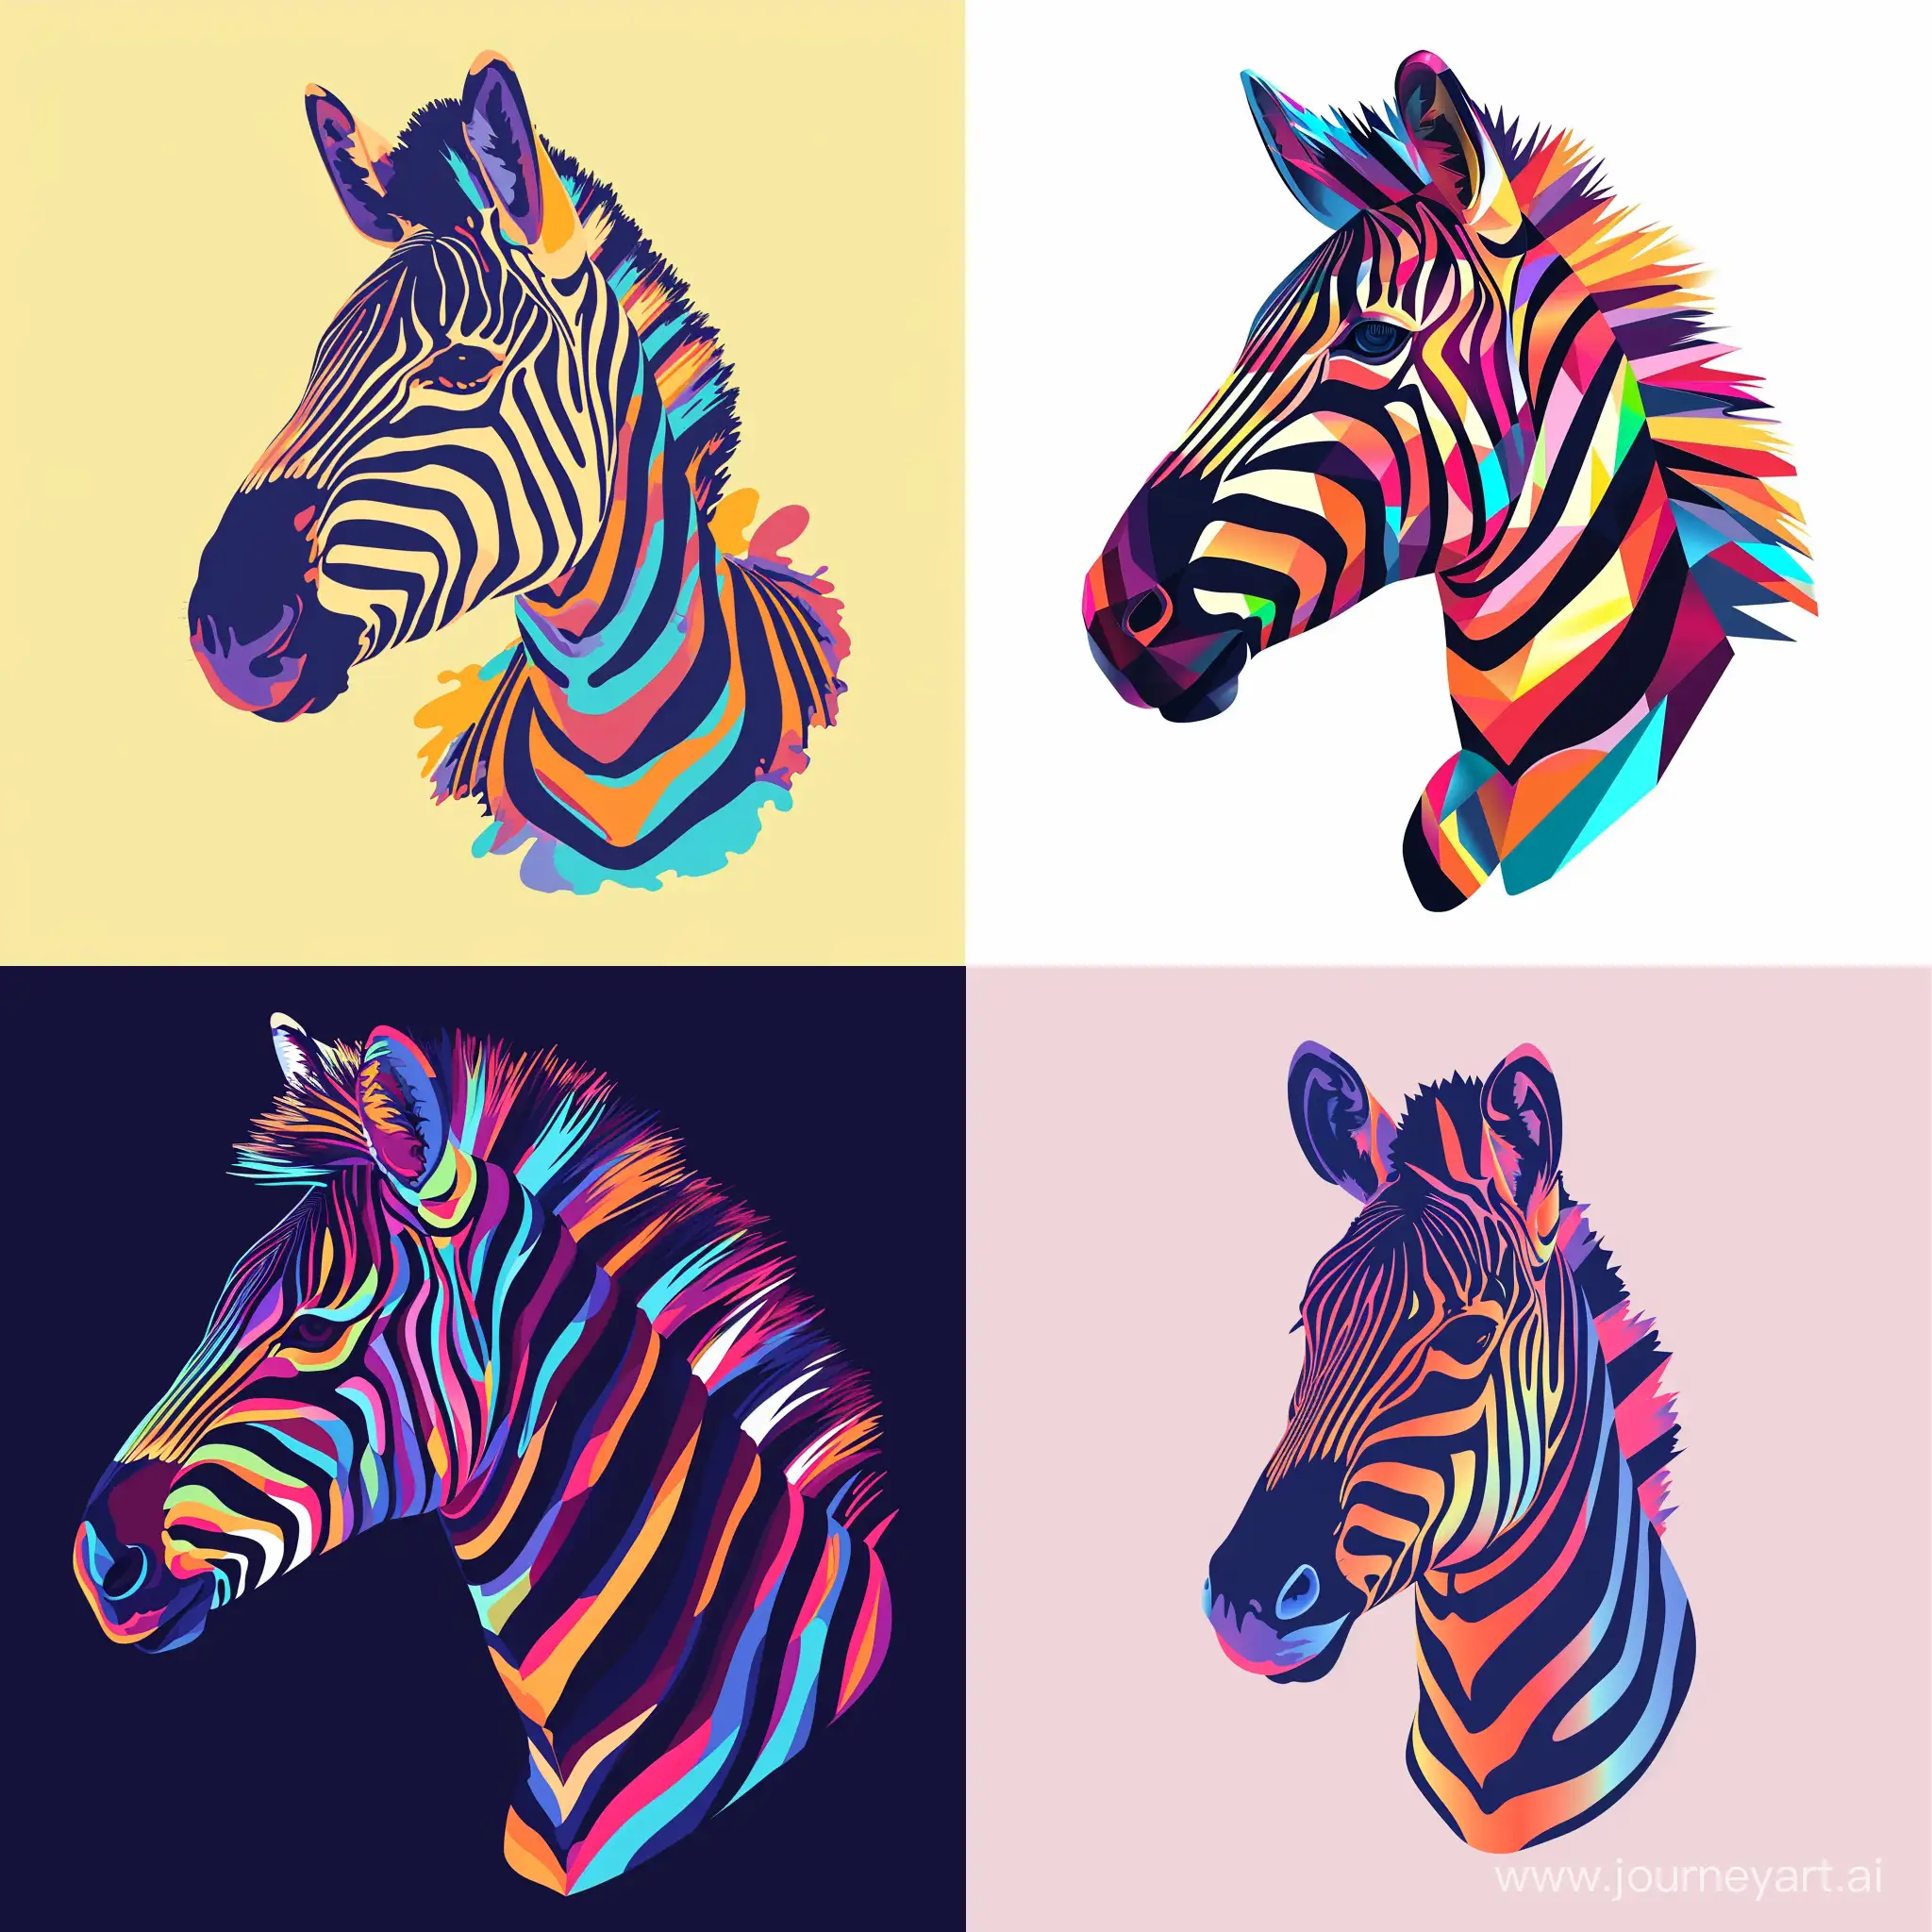 artistic logo of a zebra head, colorful